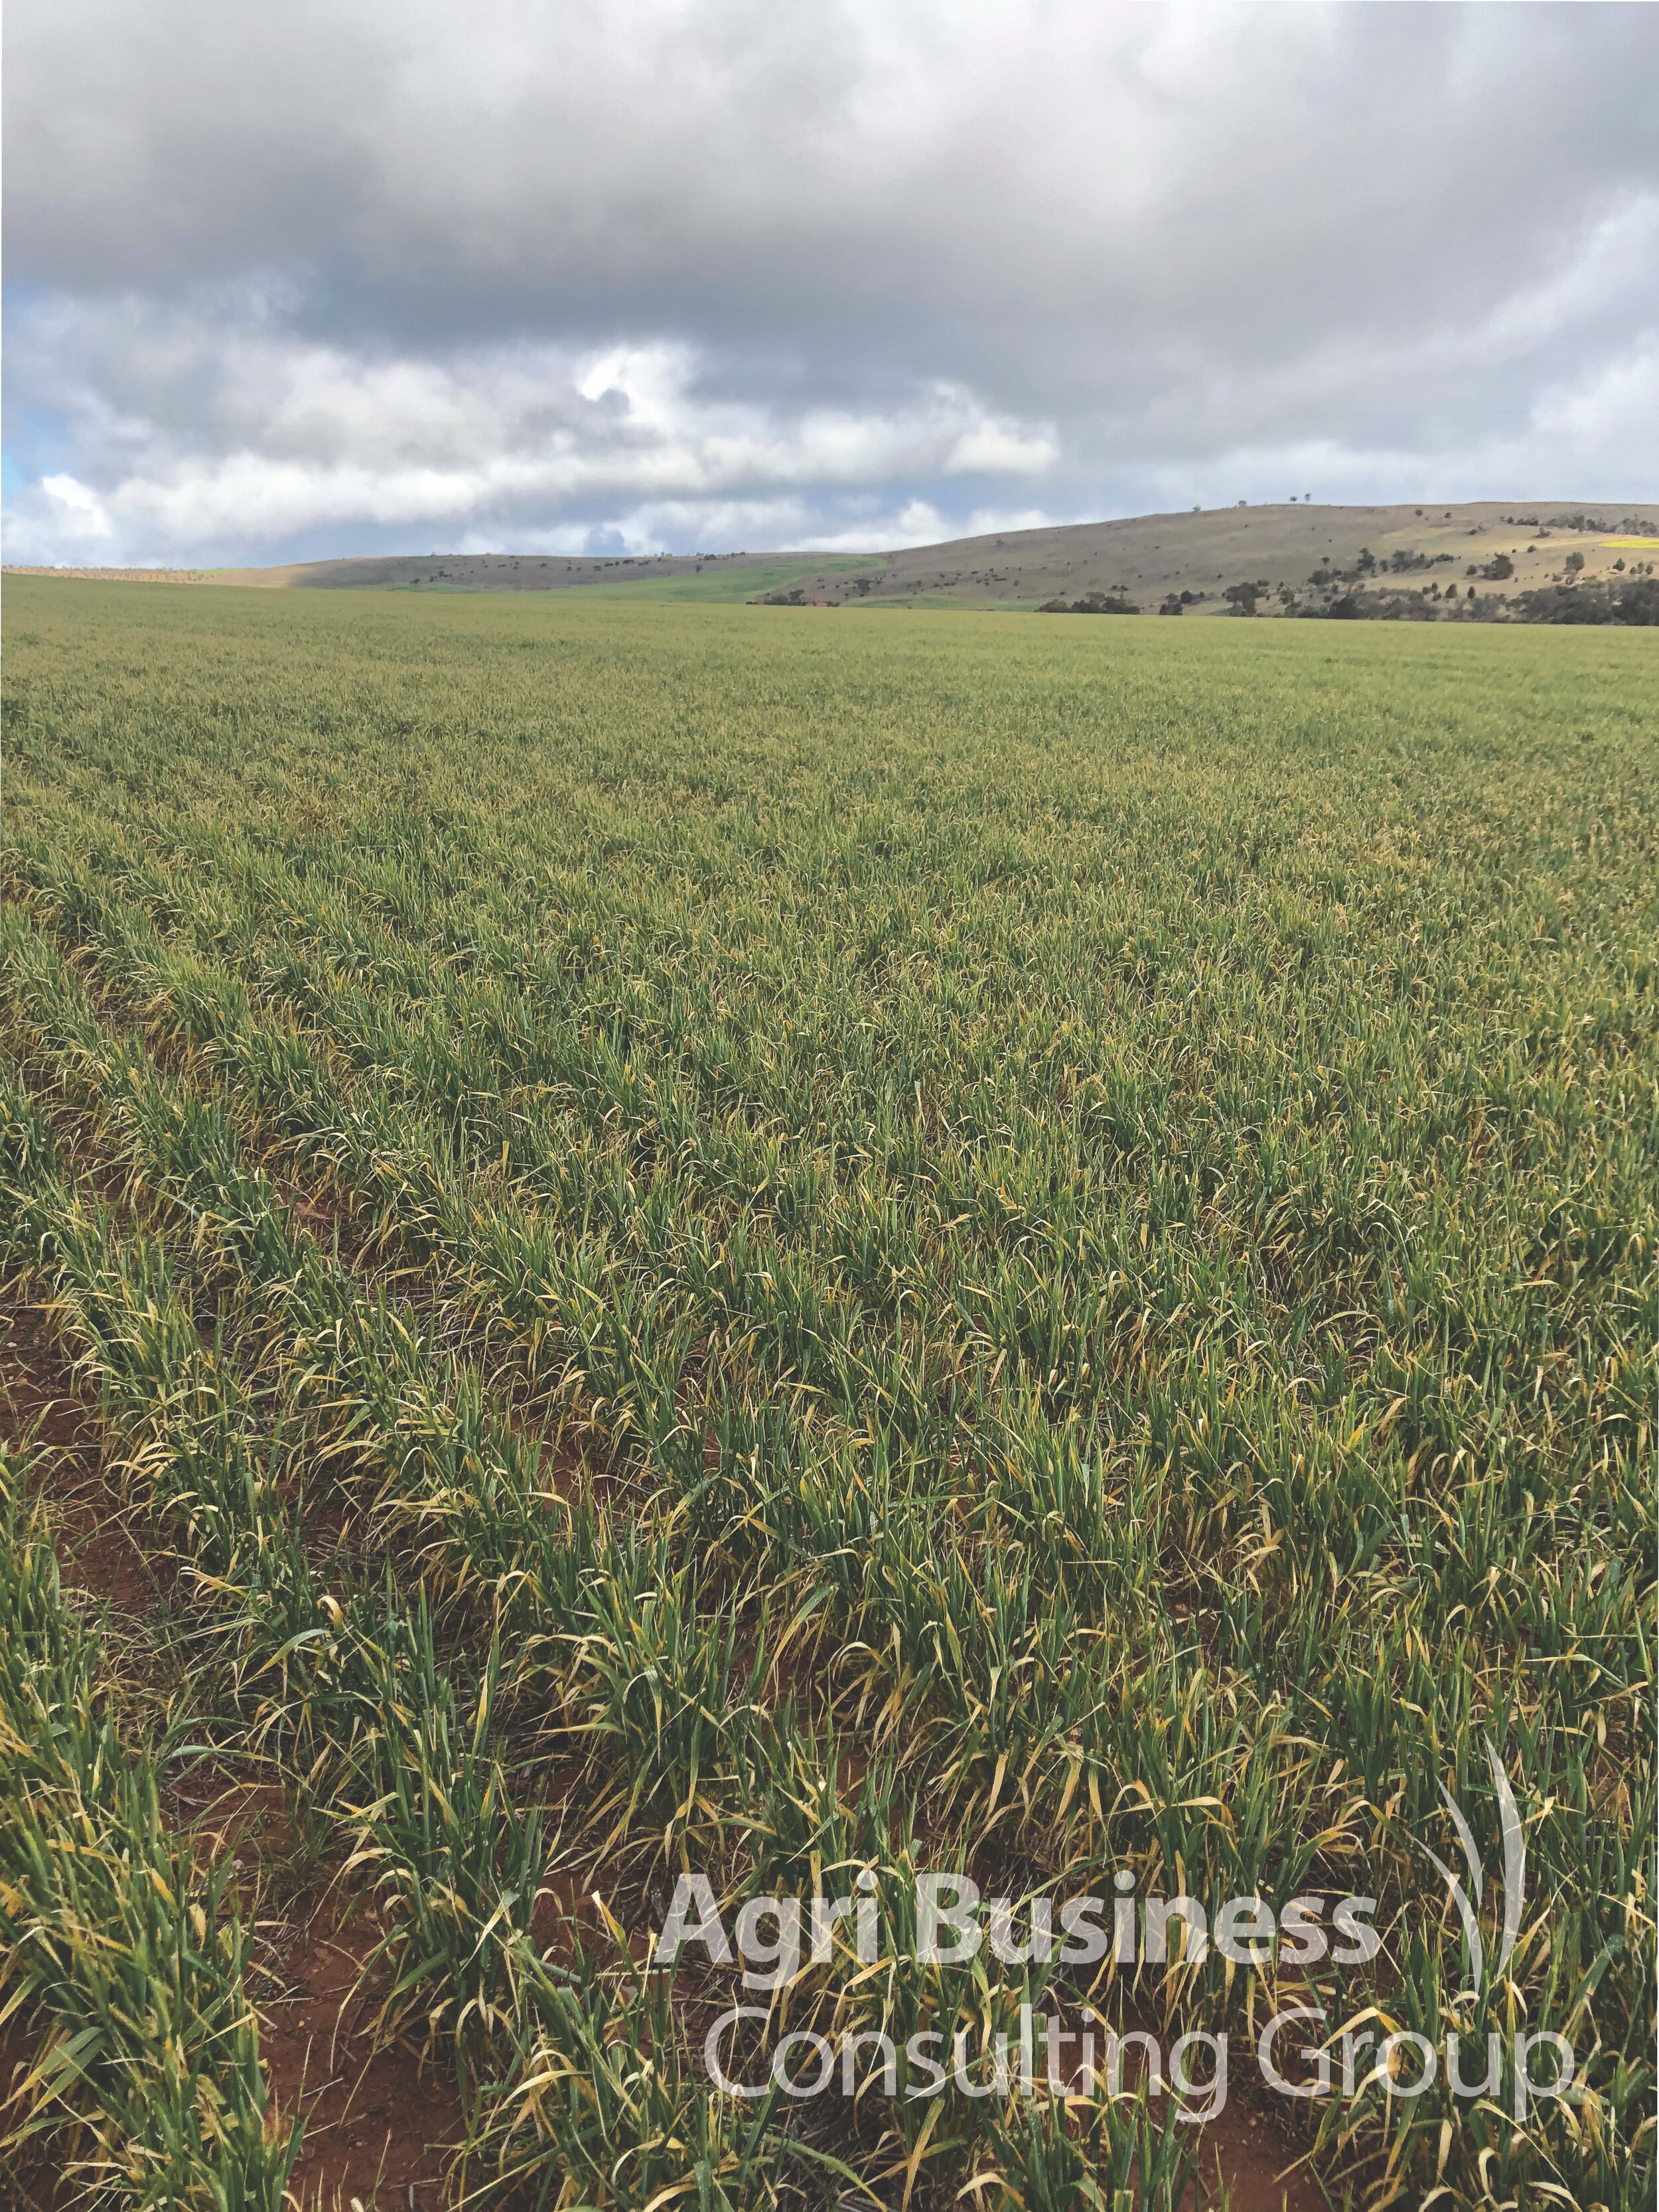 Frost affected Barley crop, October 2019